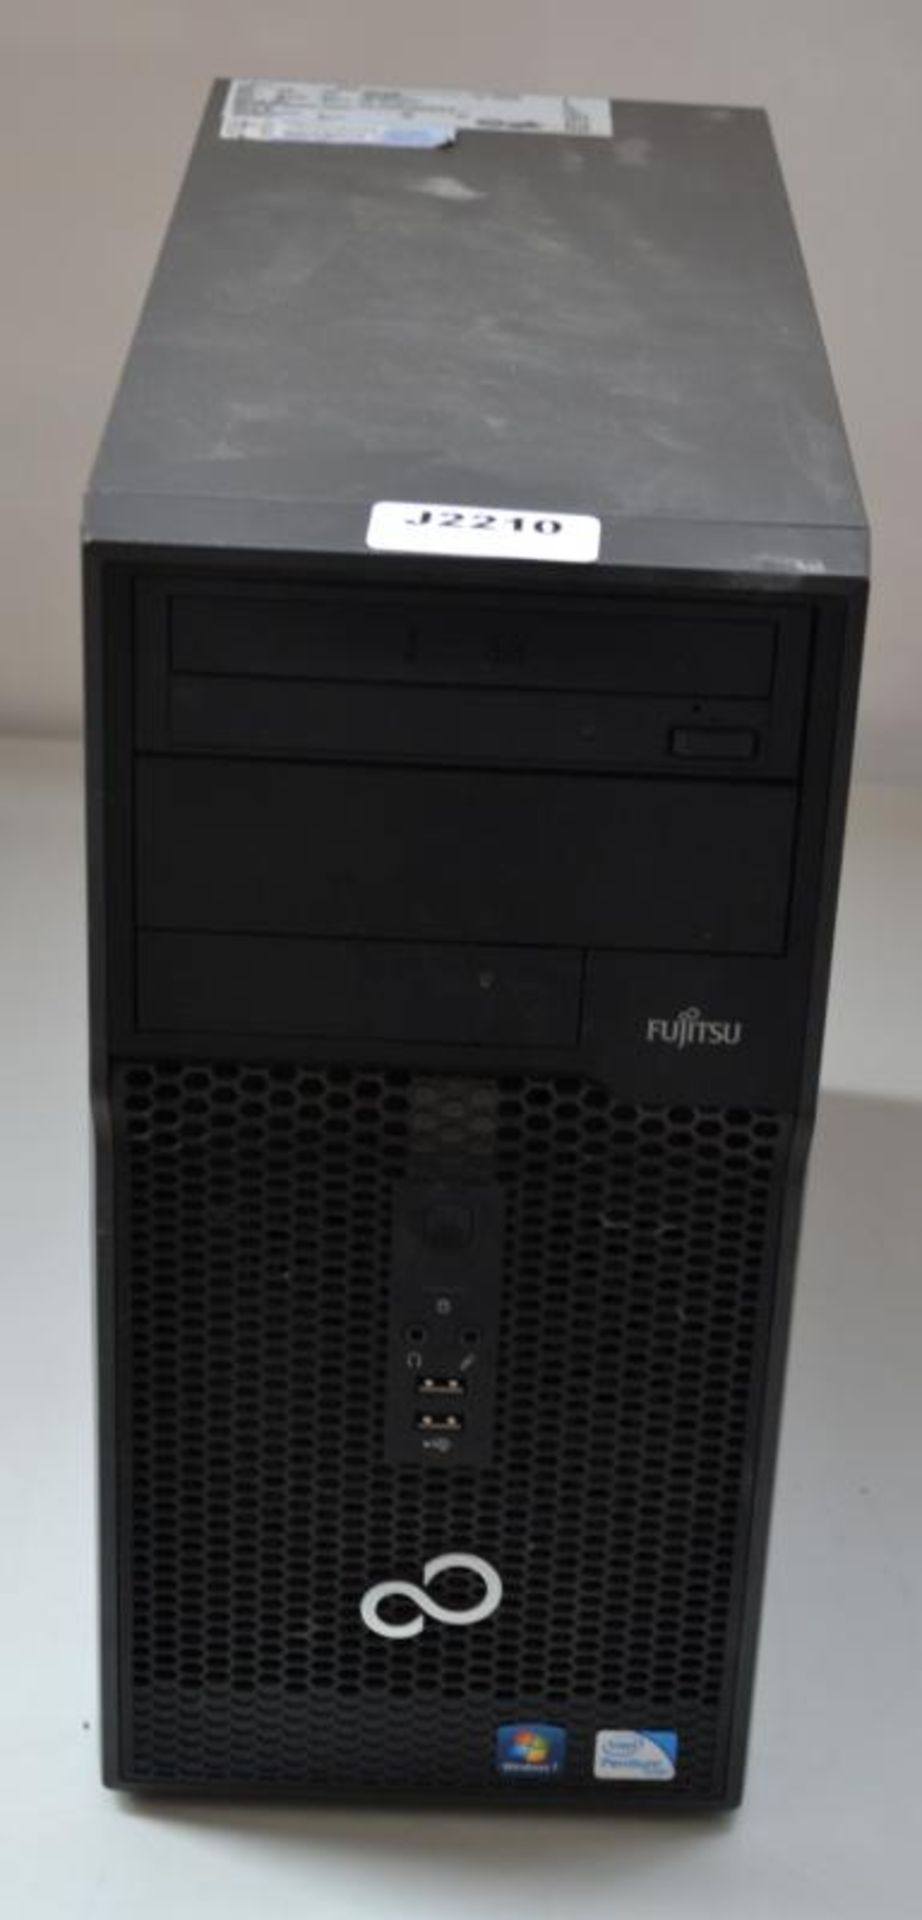 1 x FUJITSU ESPRIMO P400 DESKTOP COMPUTER INTEL PENTIUM 3.20 GHZ 4GB RAM Hard Drive Not included - R